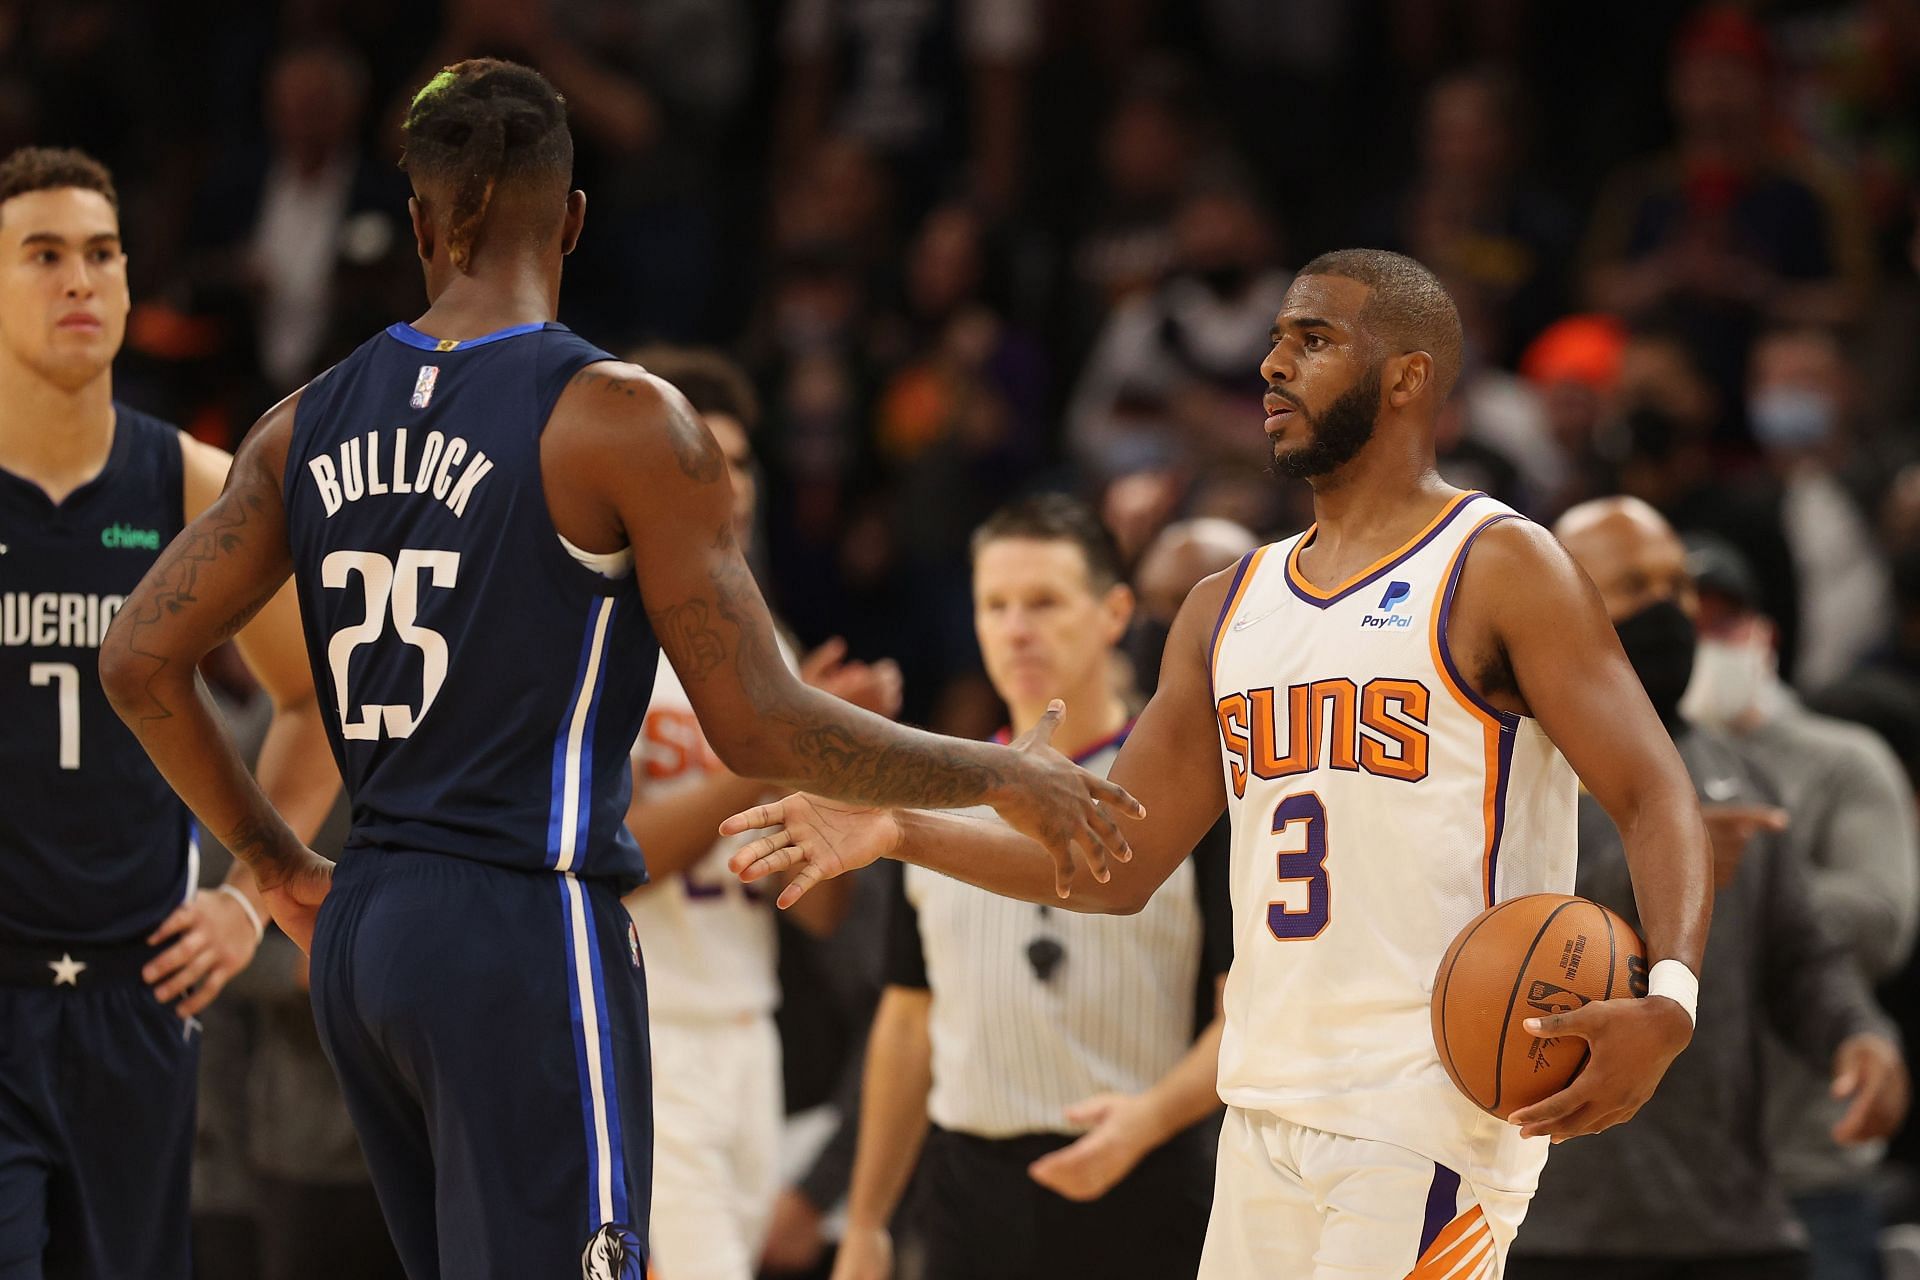 The Mavericks and Suns play Game 1 on Monday night.